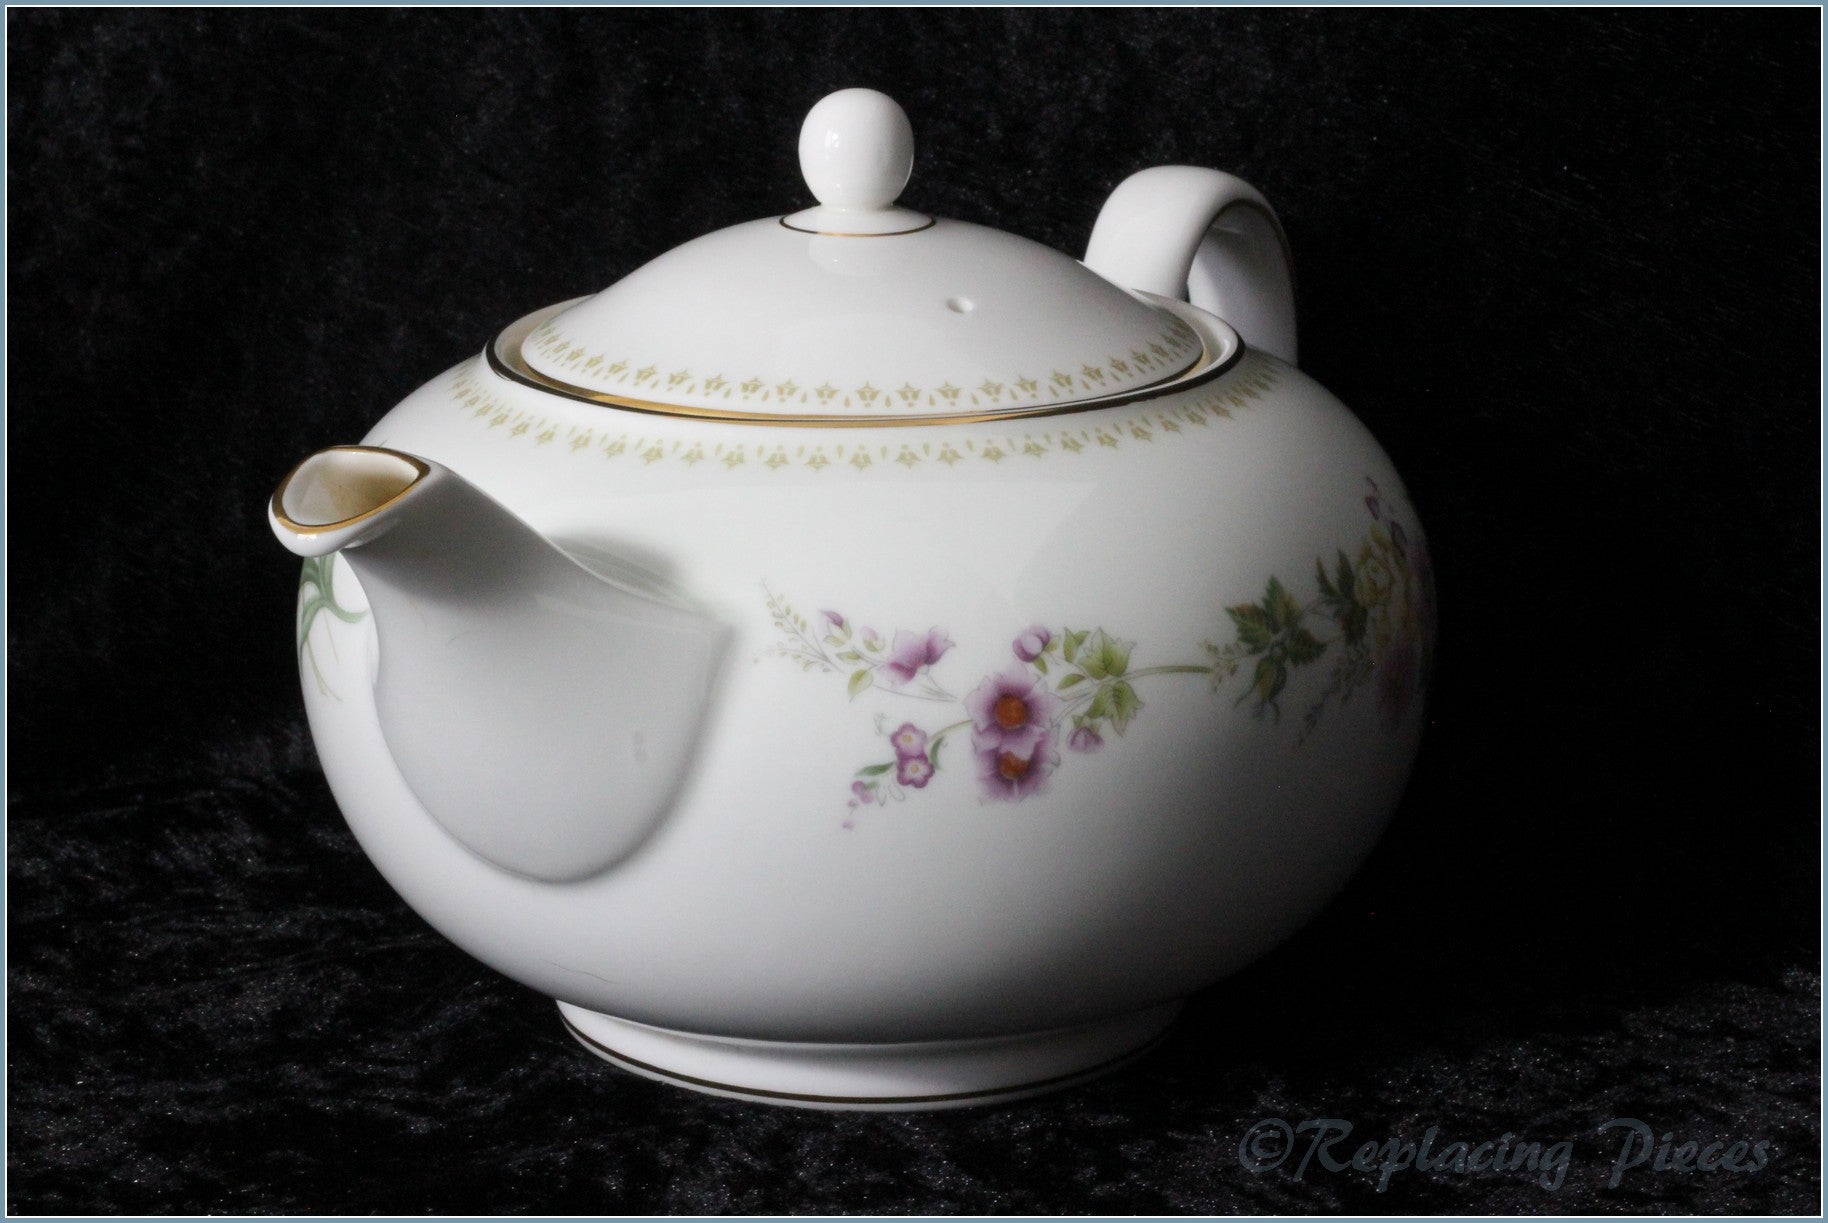 Wedgwood - Mirabelle (R4537) - Teapot